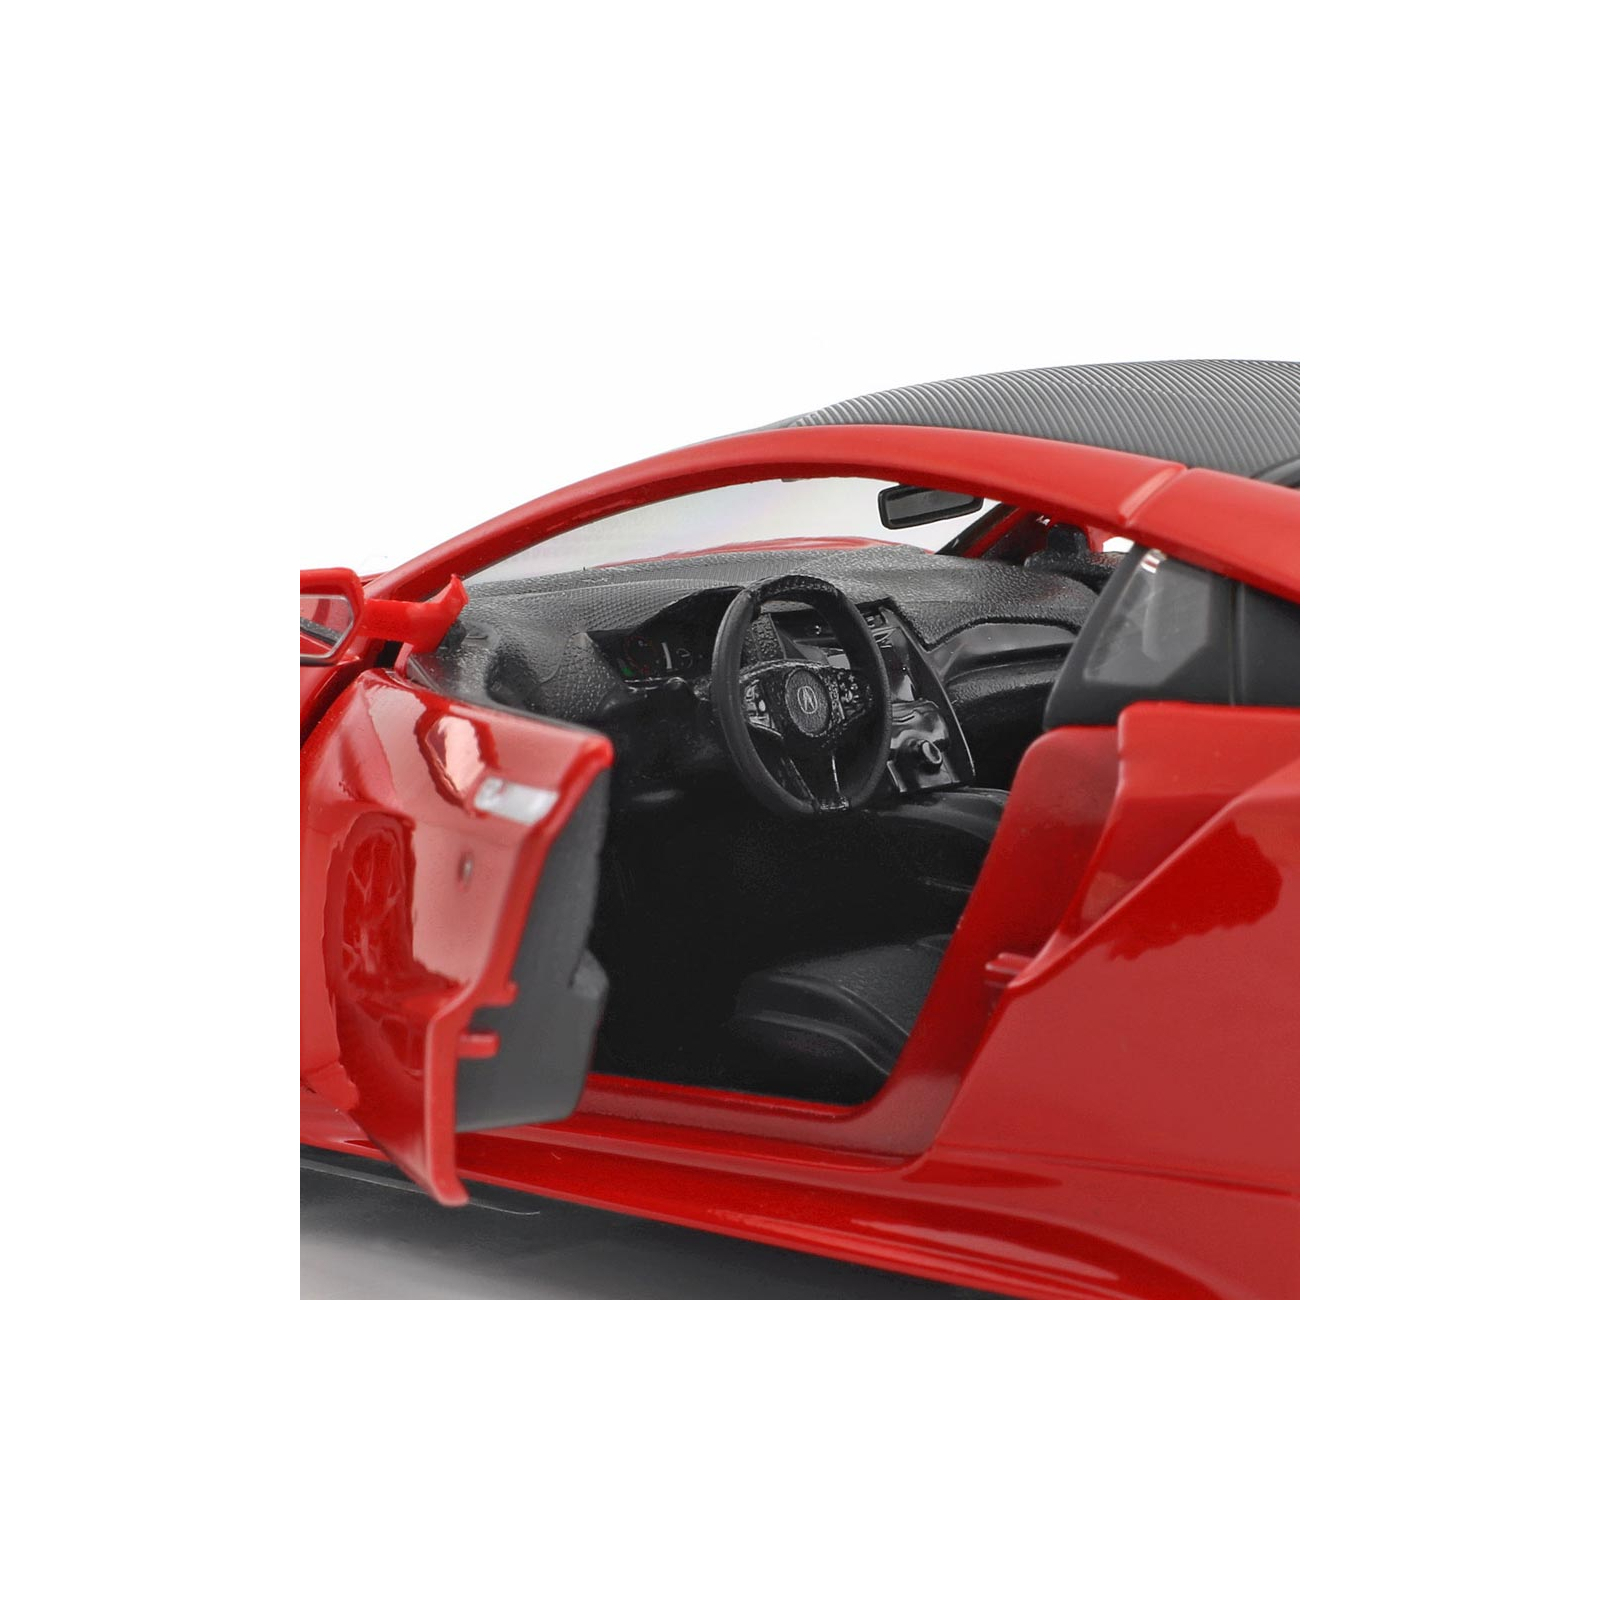 Машина Maisto 2017 Acura NSX красный (1:24) (31234 red) изображение 4